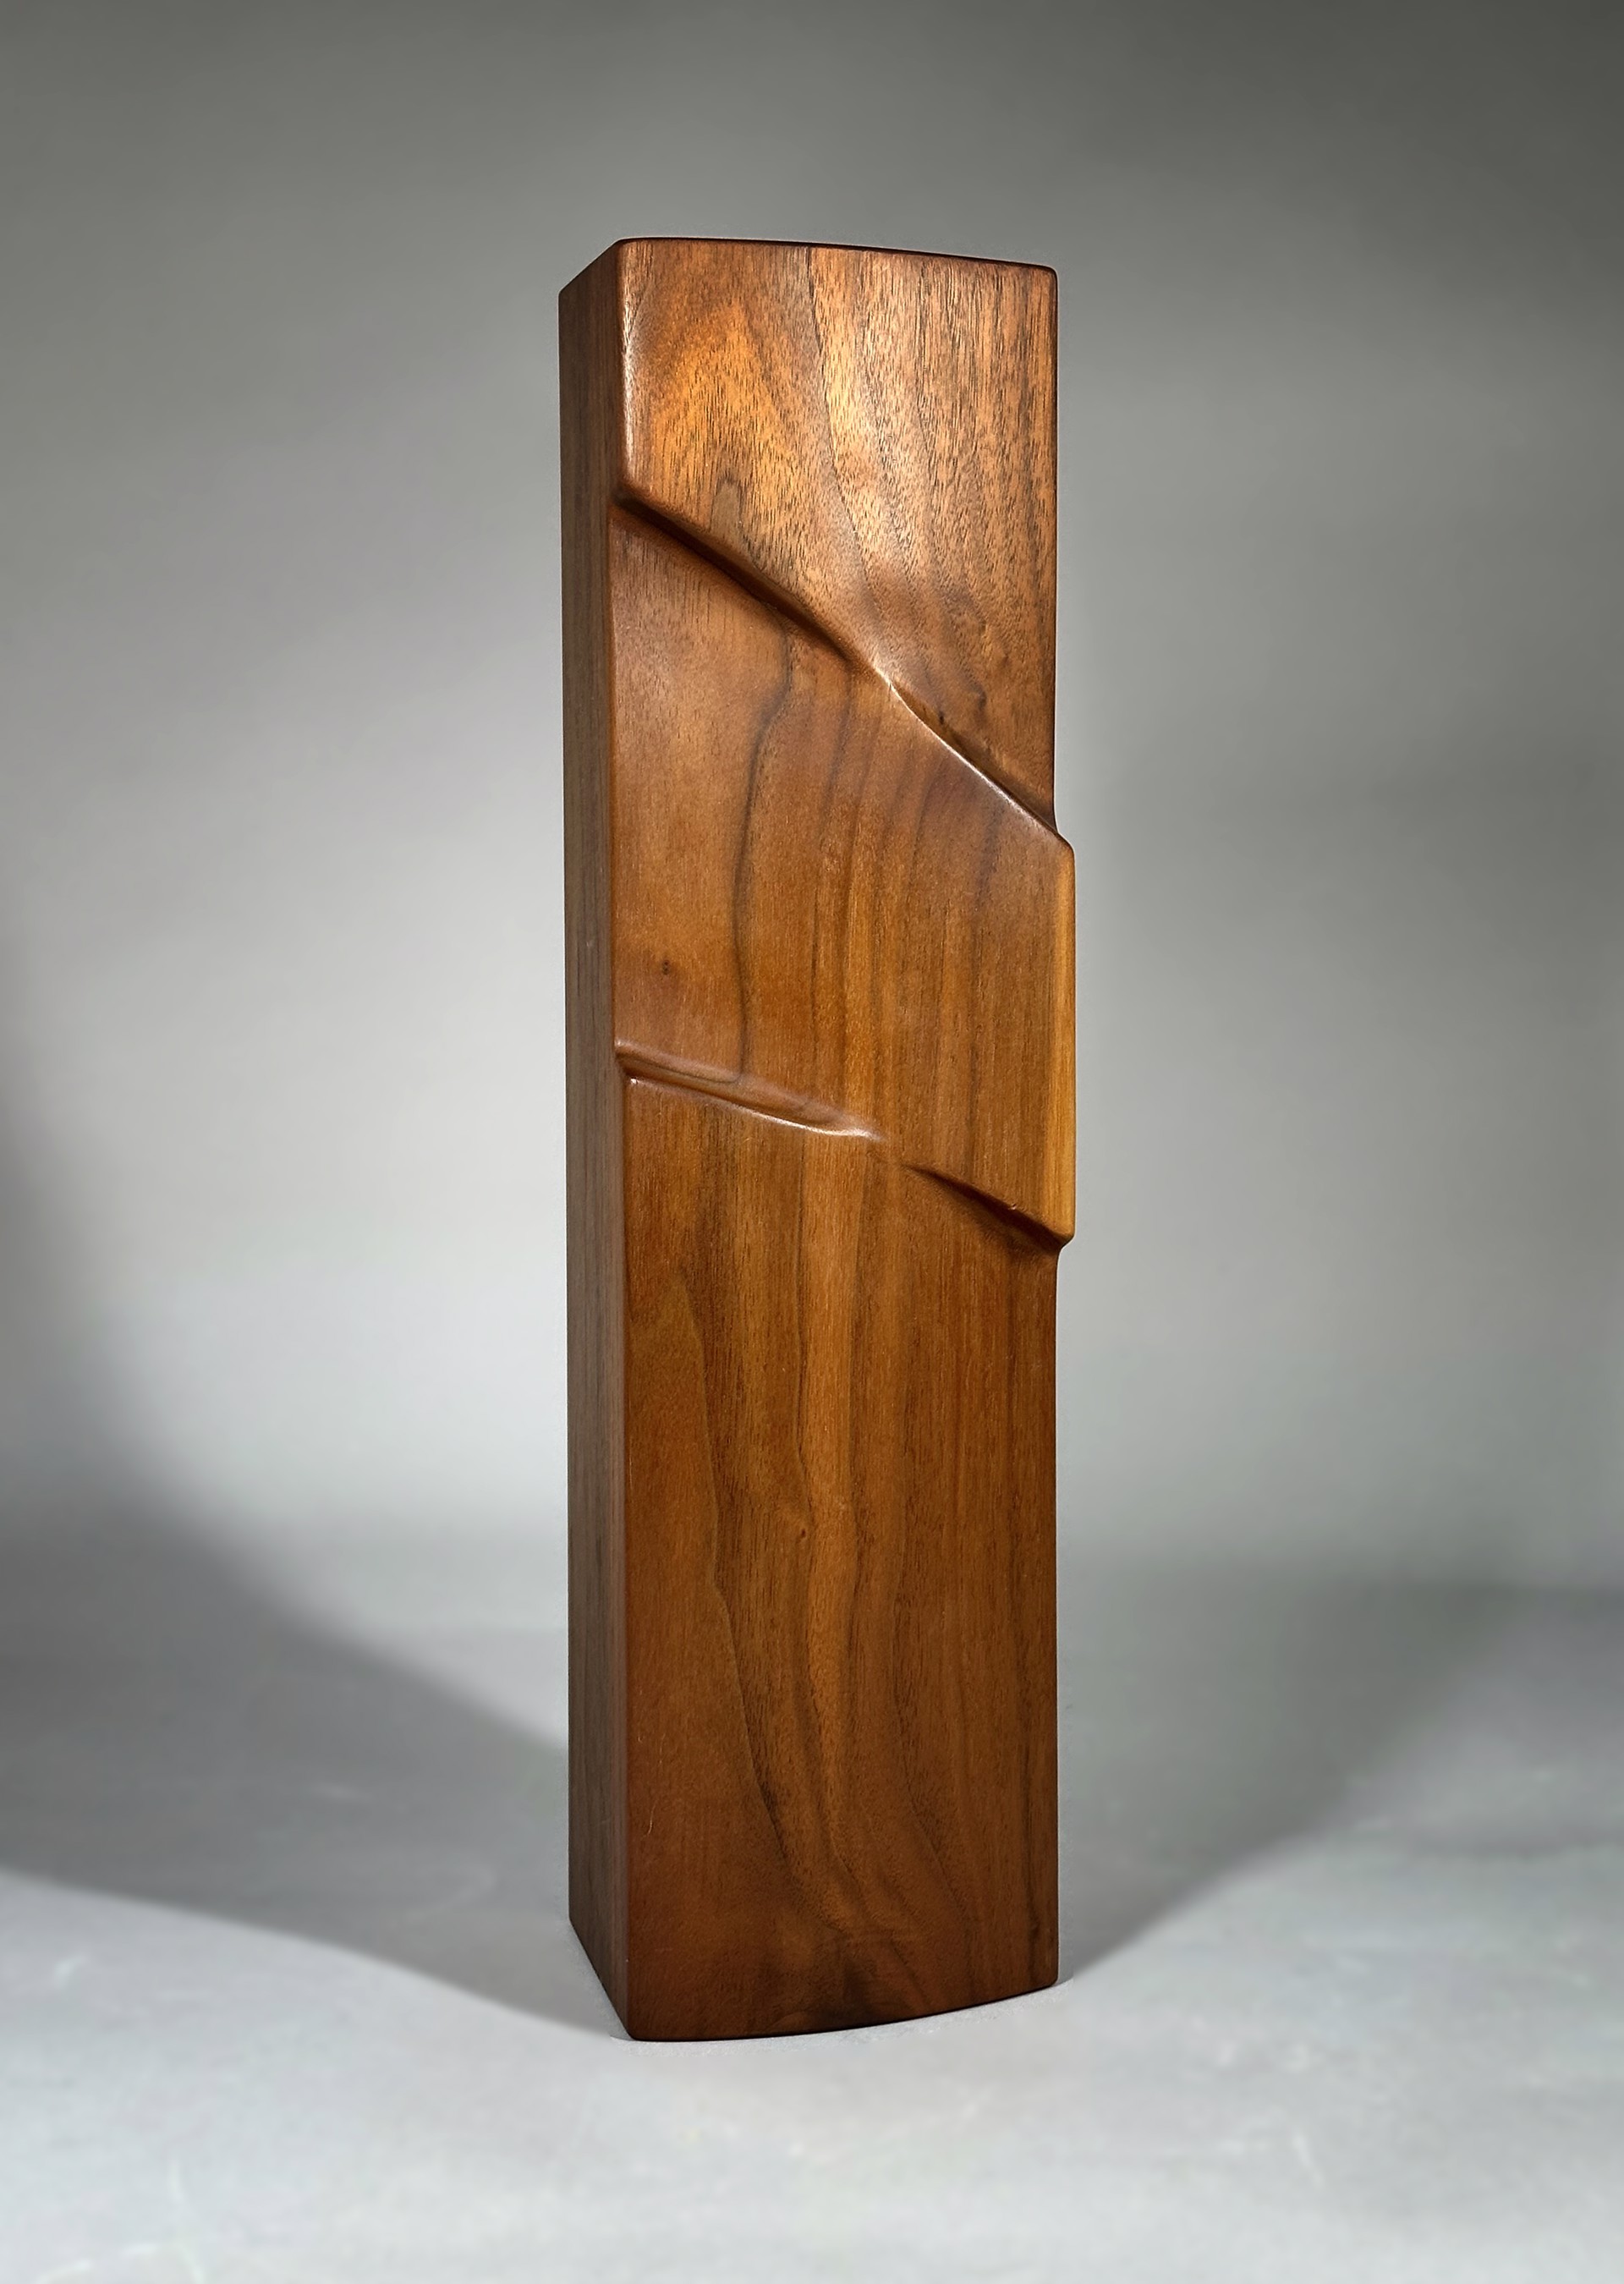 Carved Vase by David Henryson